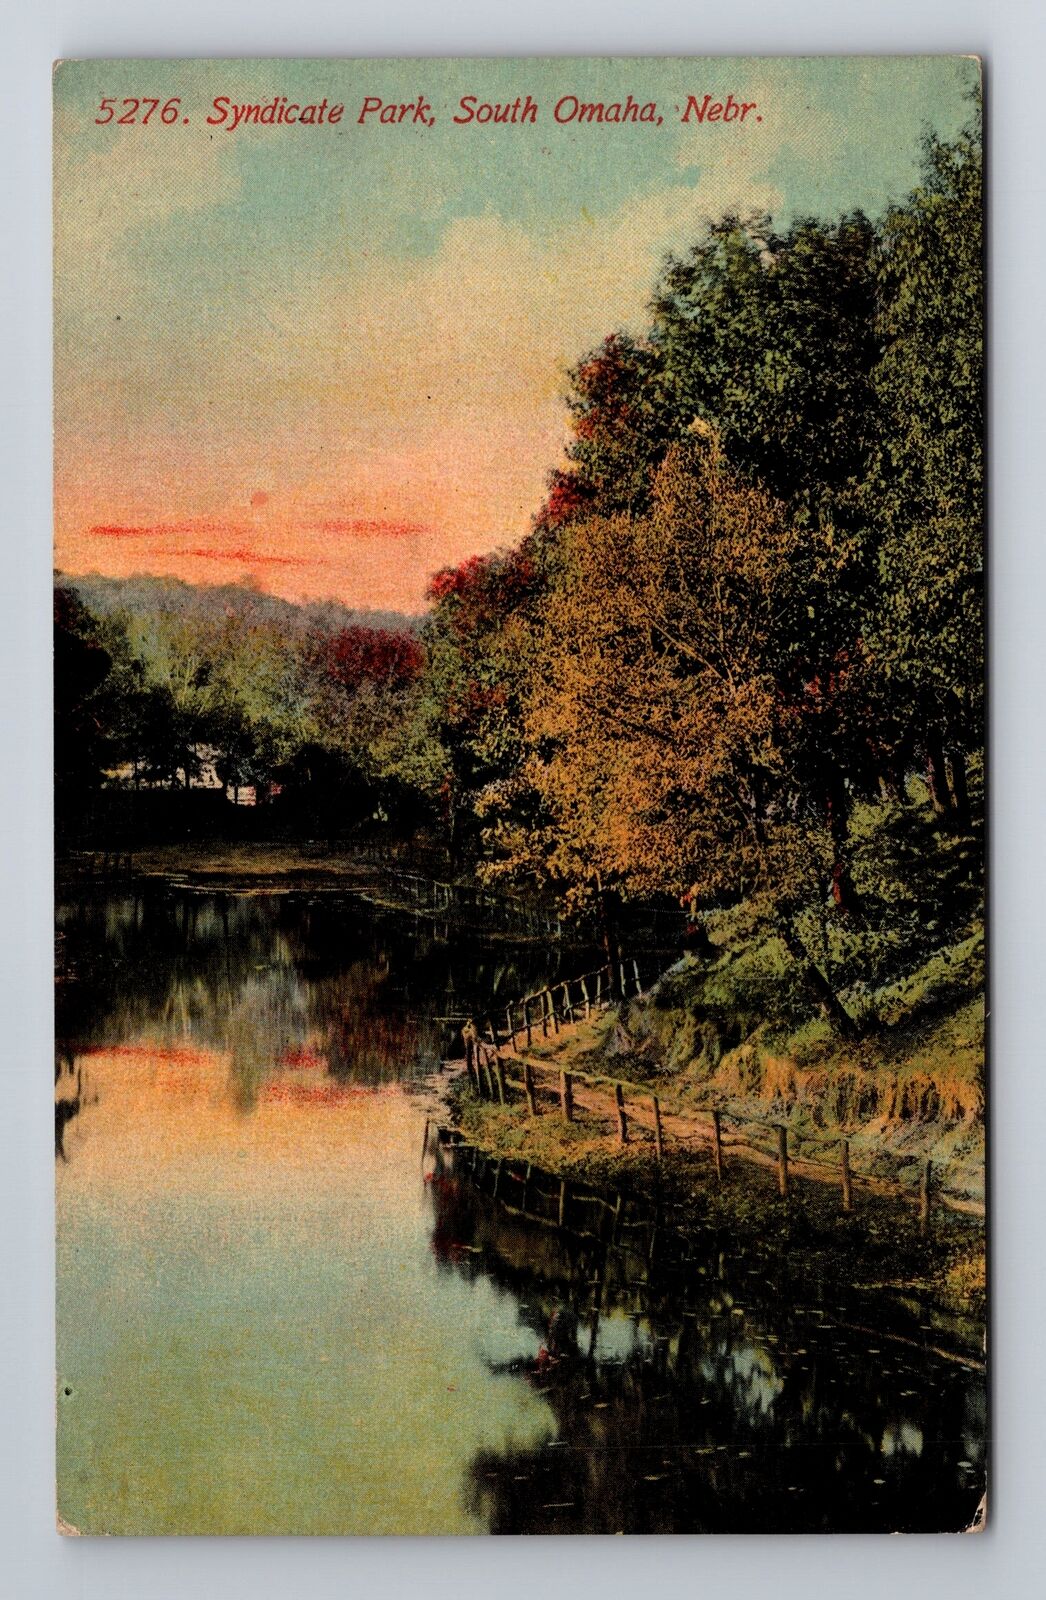 South Omaha NE-Nebraska, Syndicate Park, Antique Vintage Souvenir Postcard